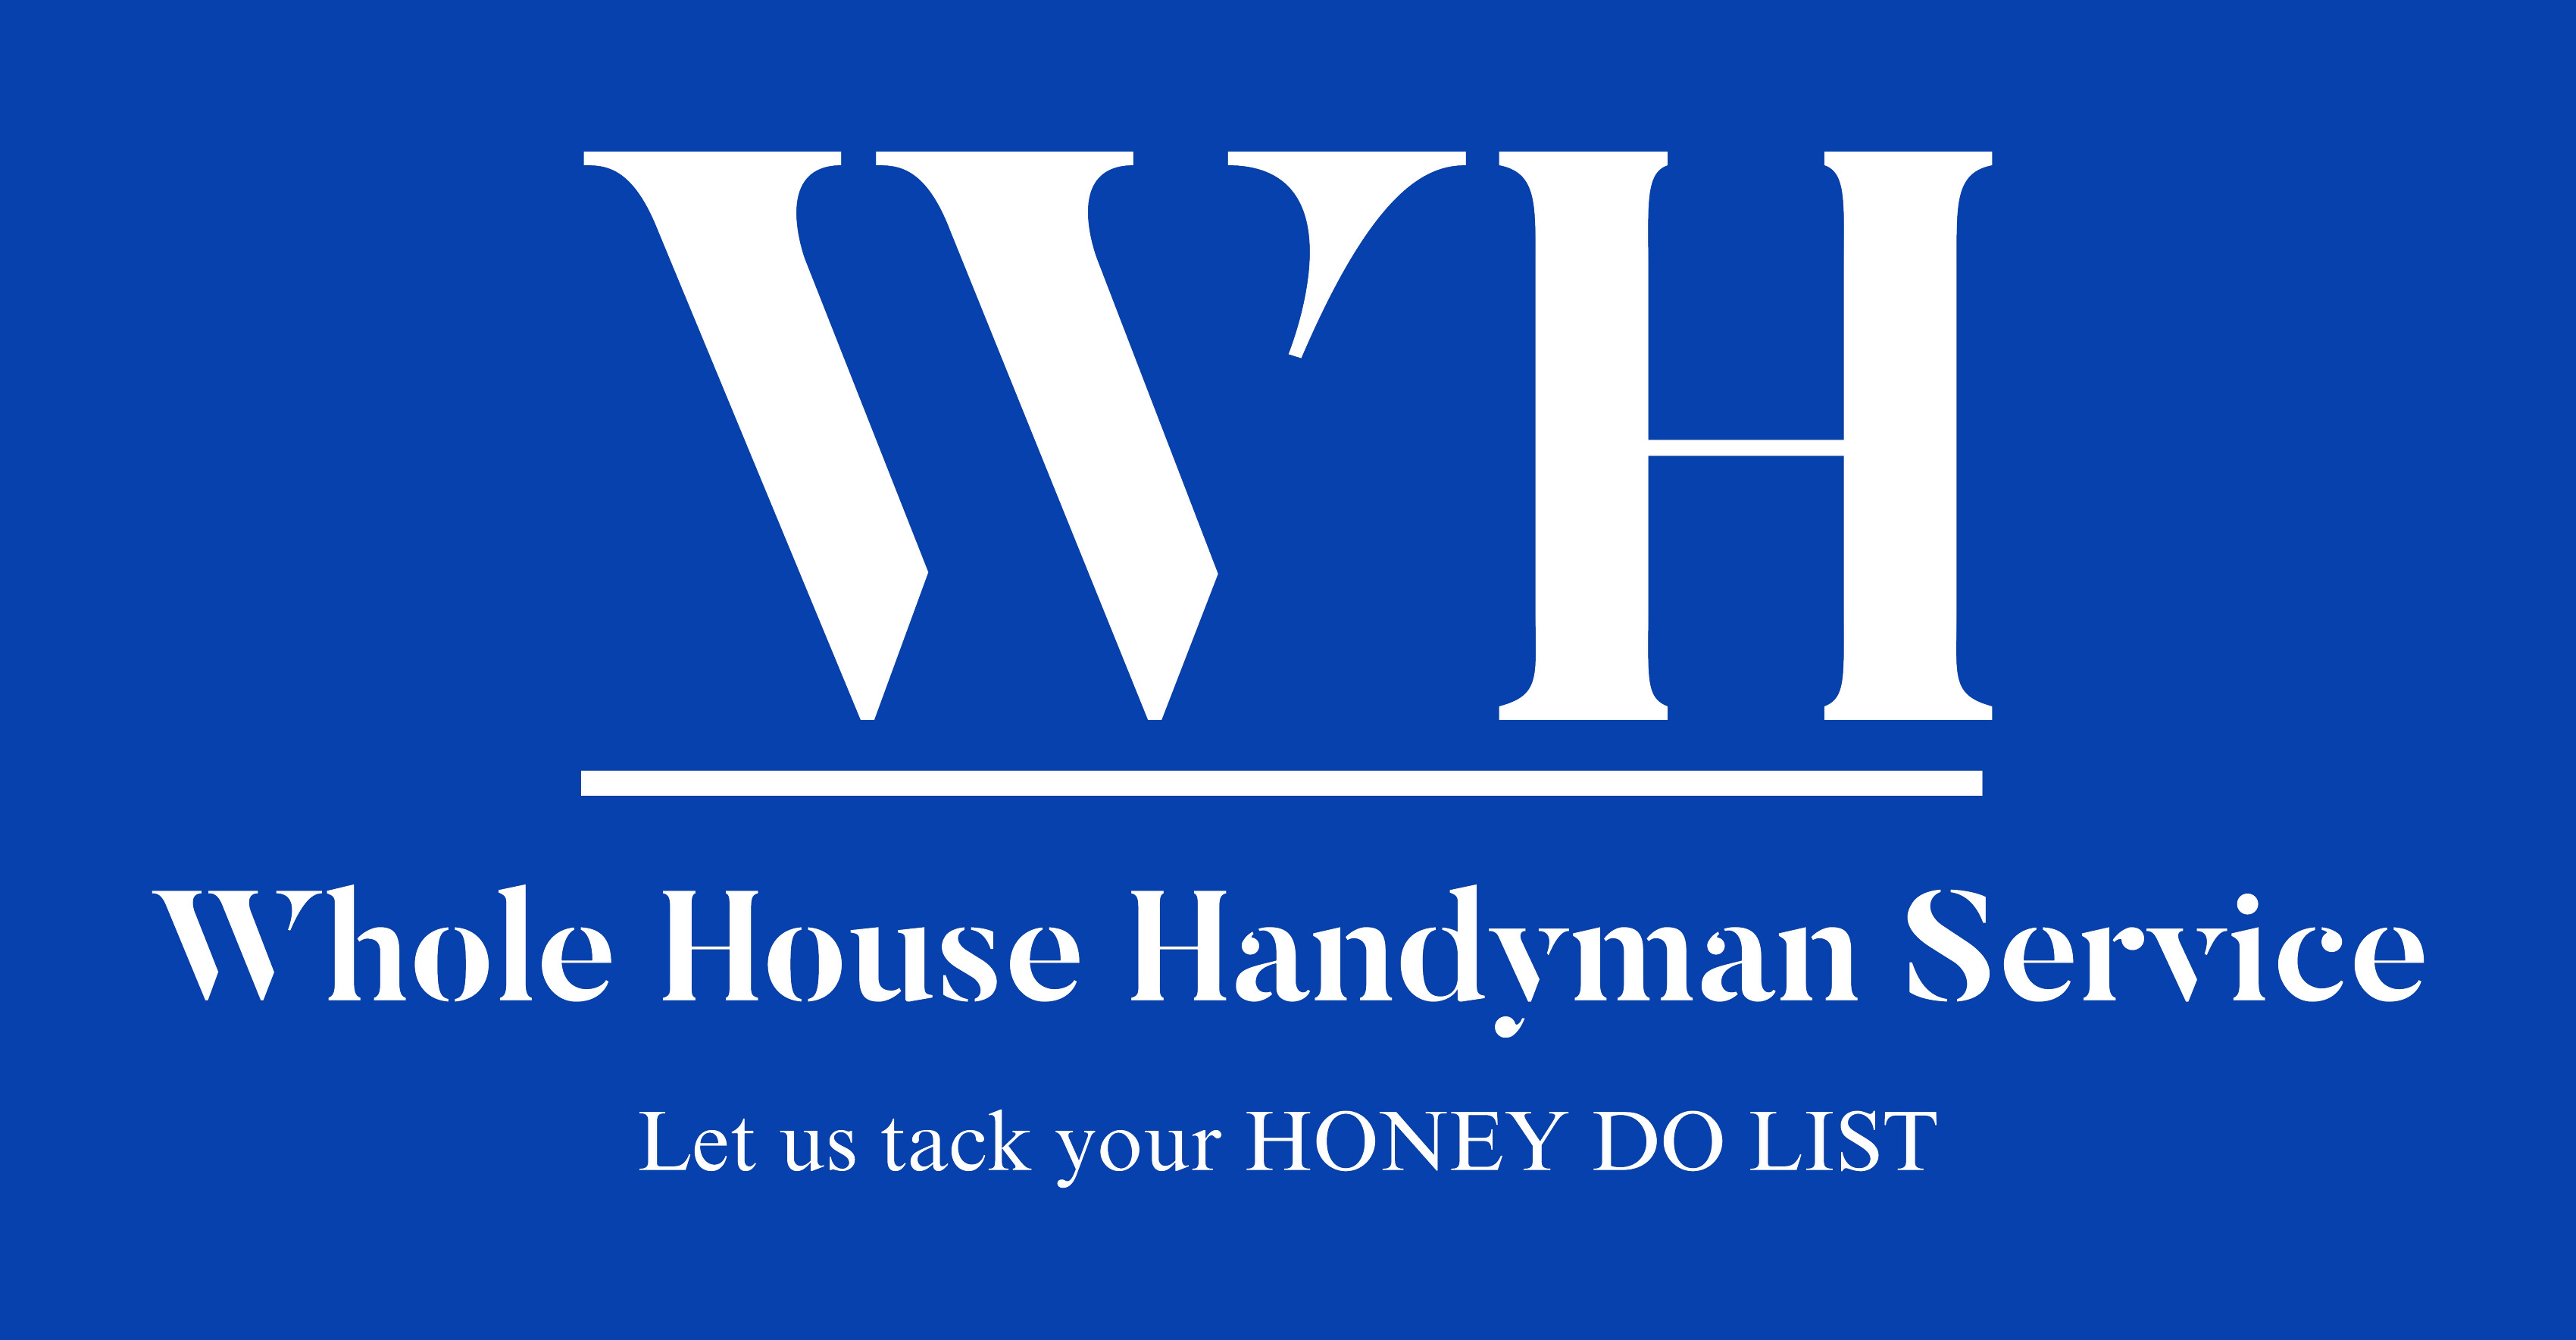 Whole House Handyman Services by CJ Logo